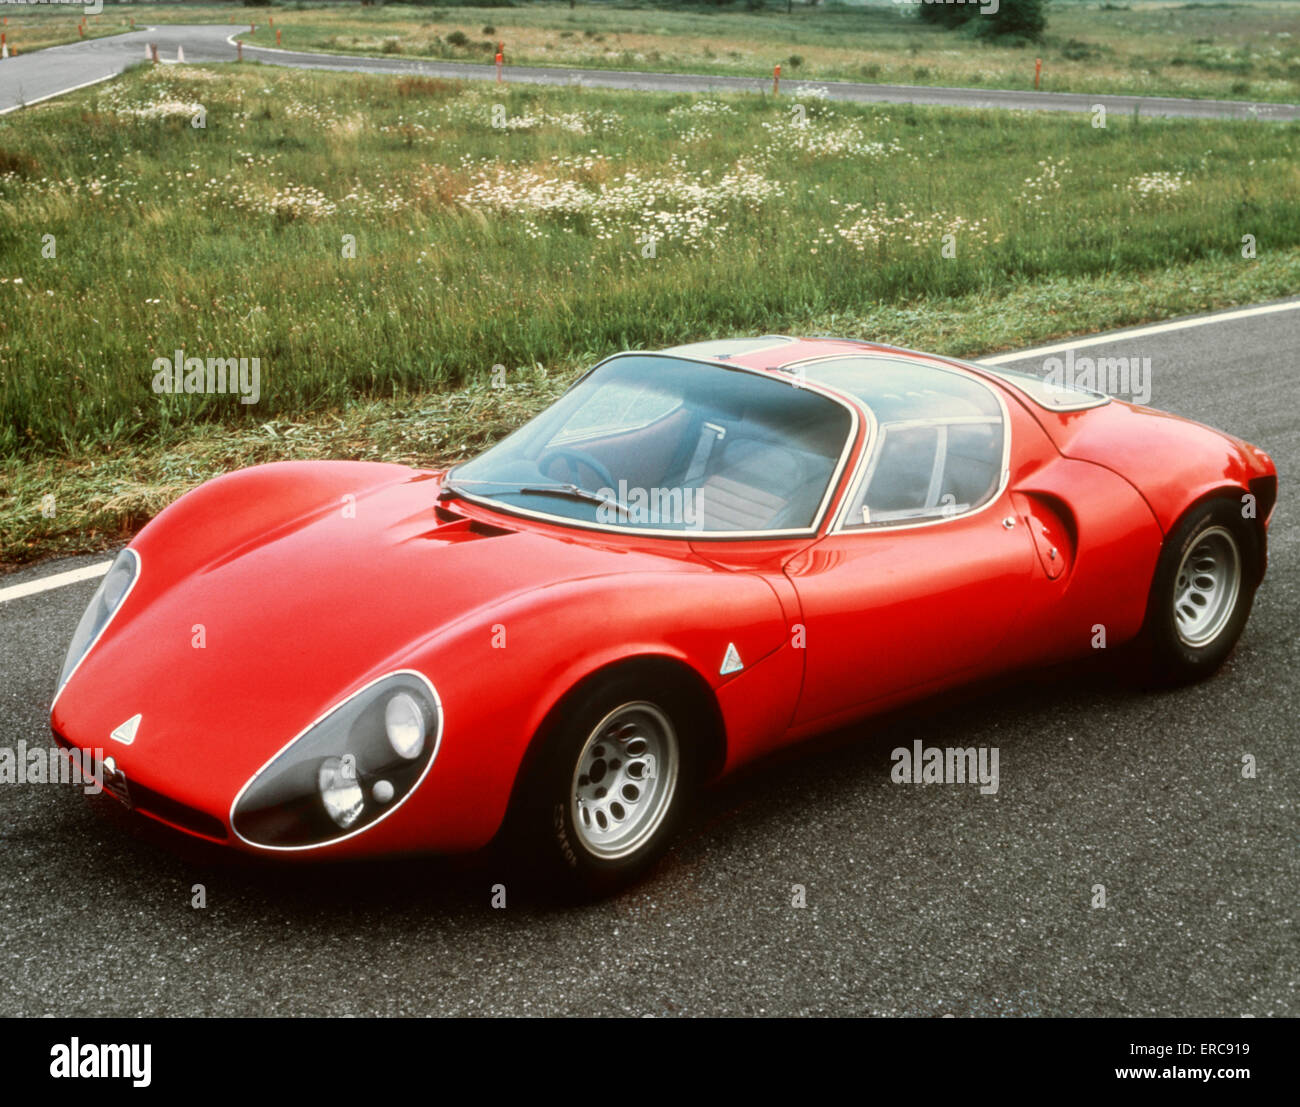 1968 ALFA ROMEO DAYTONA RED RACING SPORT CAR Stock Photo